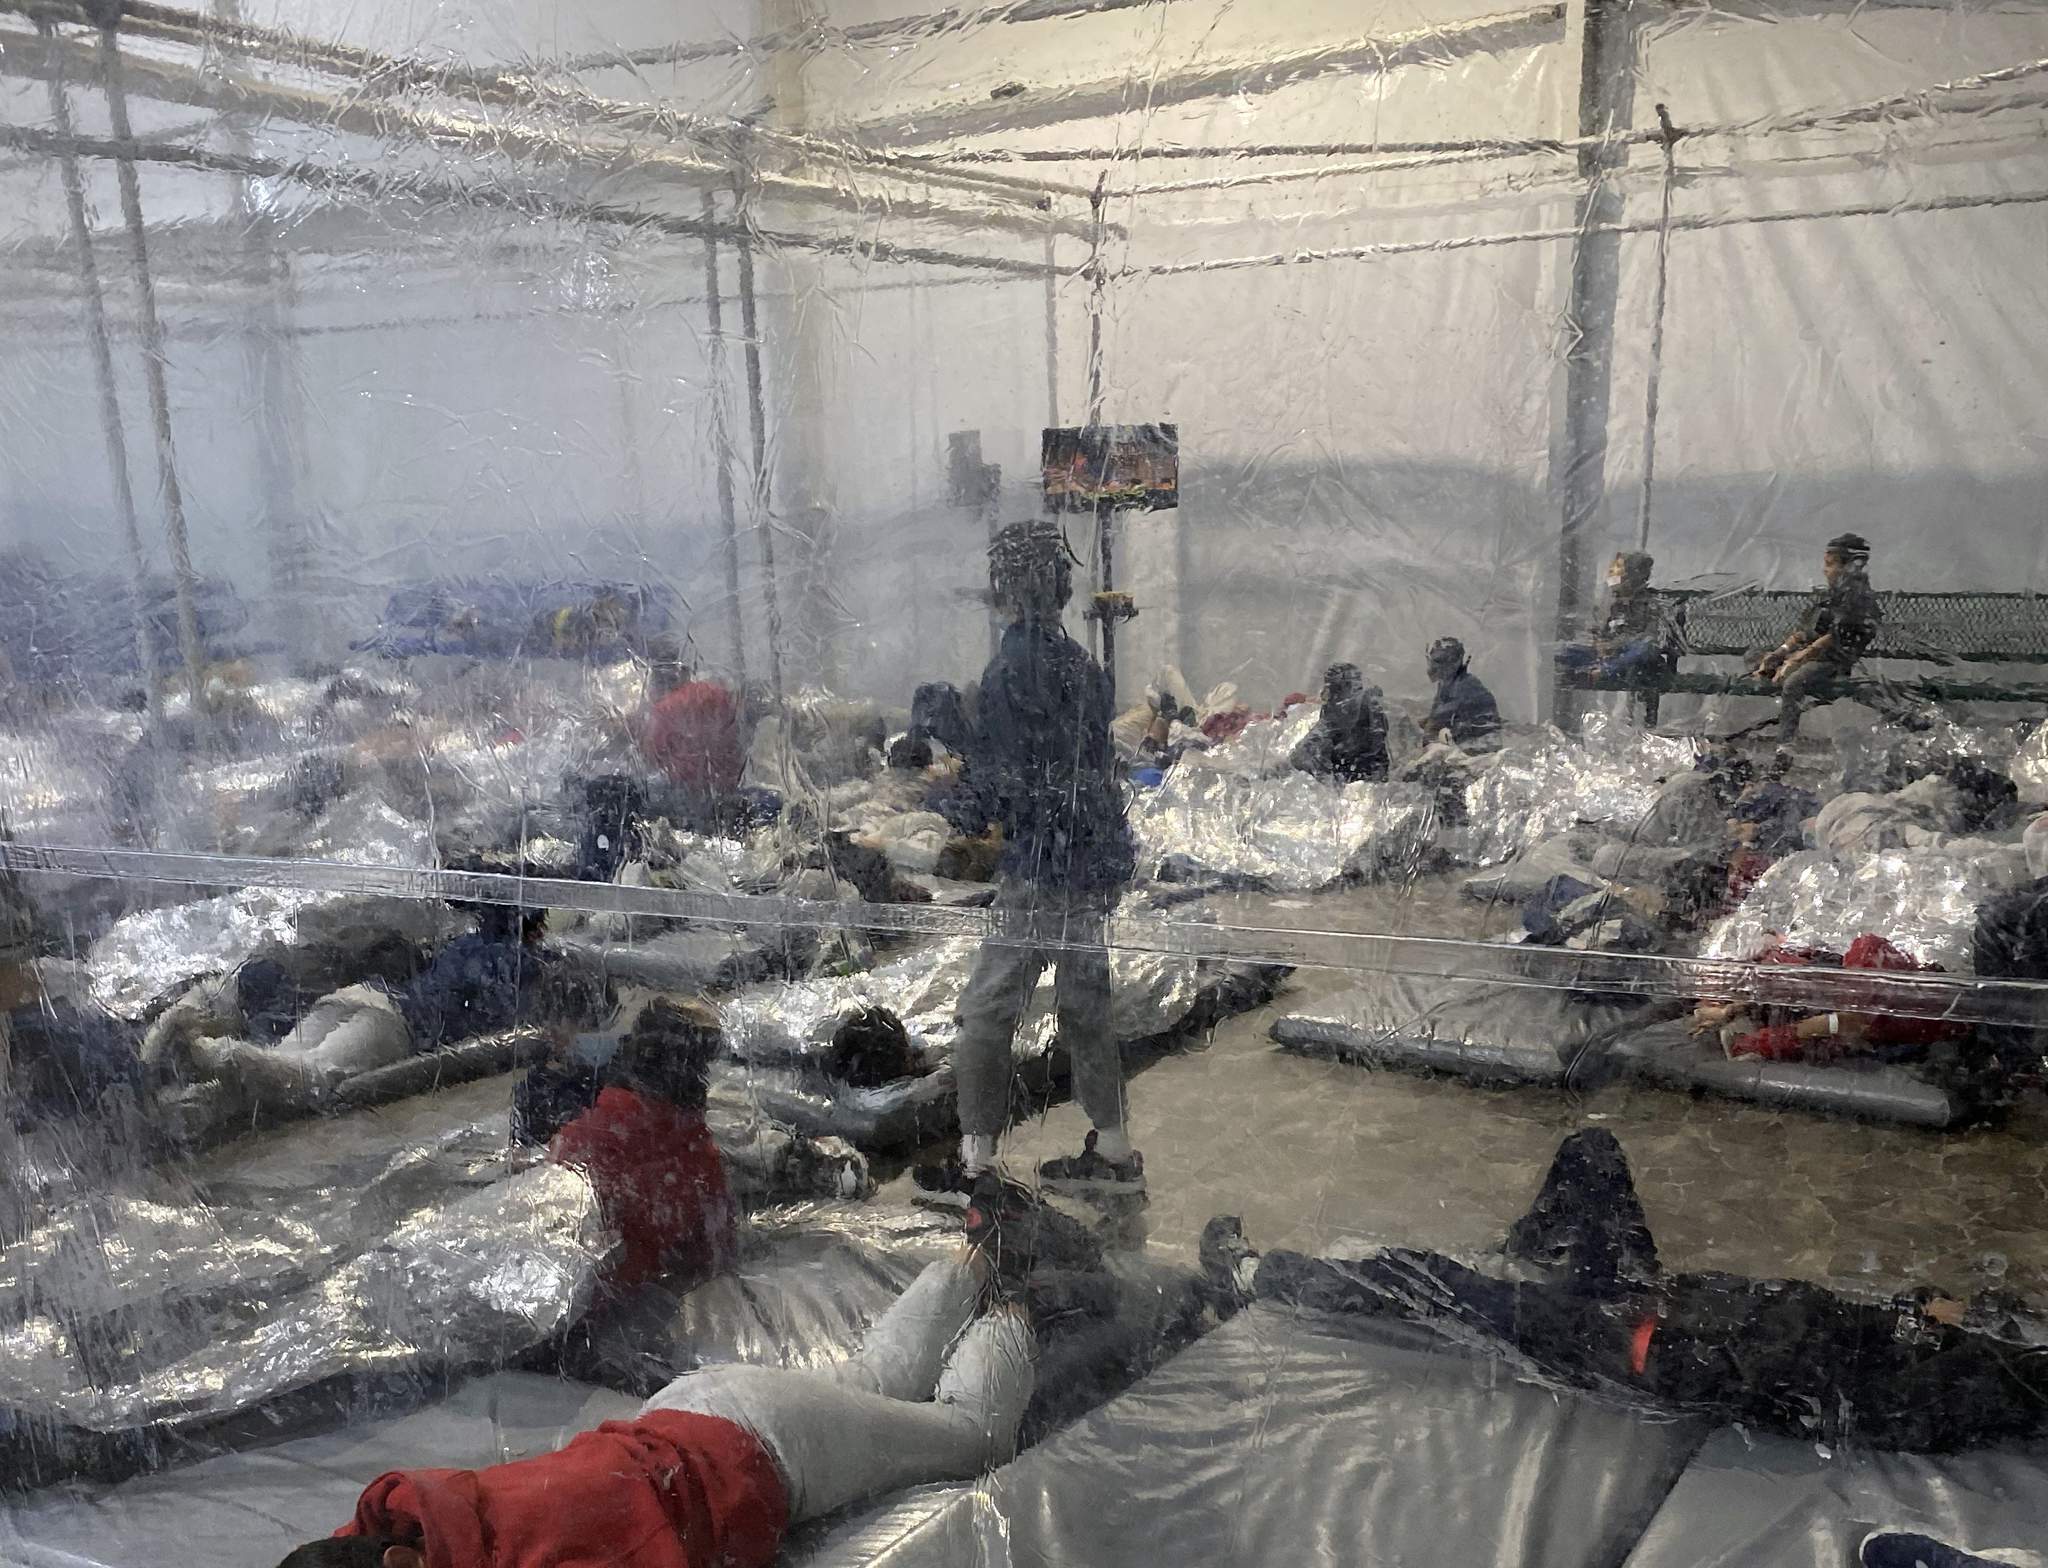 Photos of migrant detention highlight Biden's border secrecy